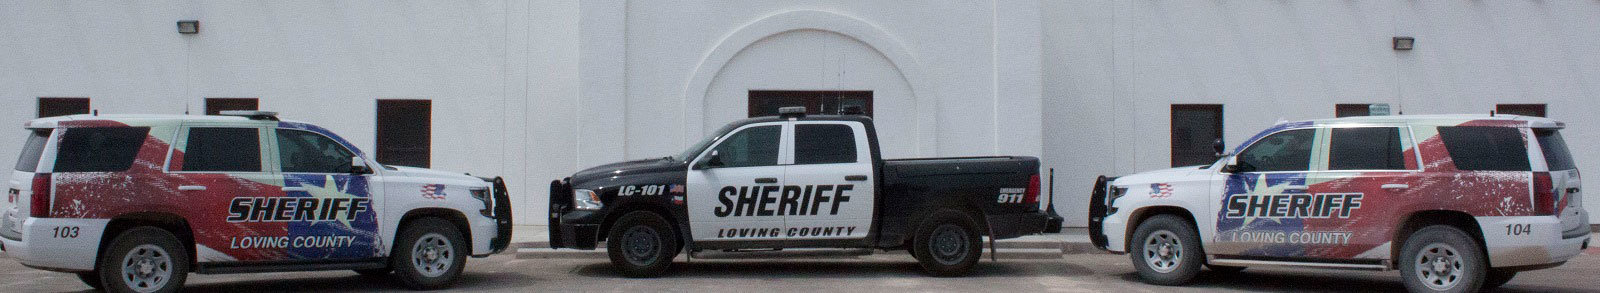 Loving County Sheriff TX Homepage Slideshow